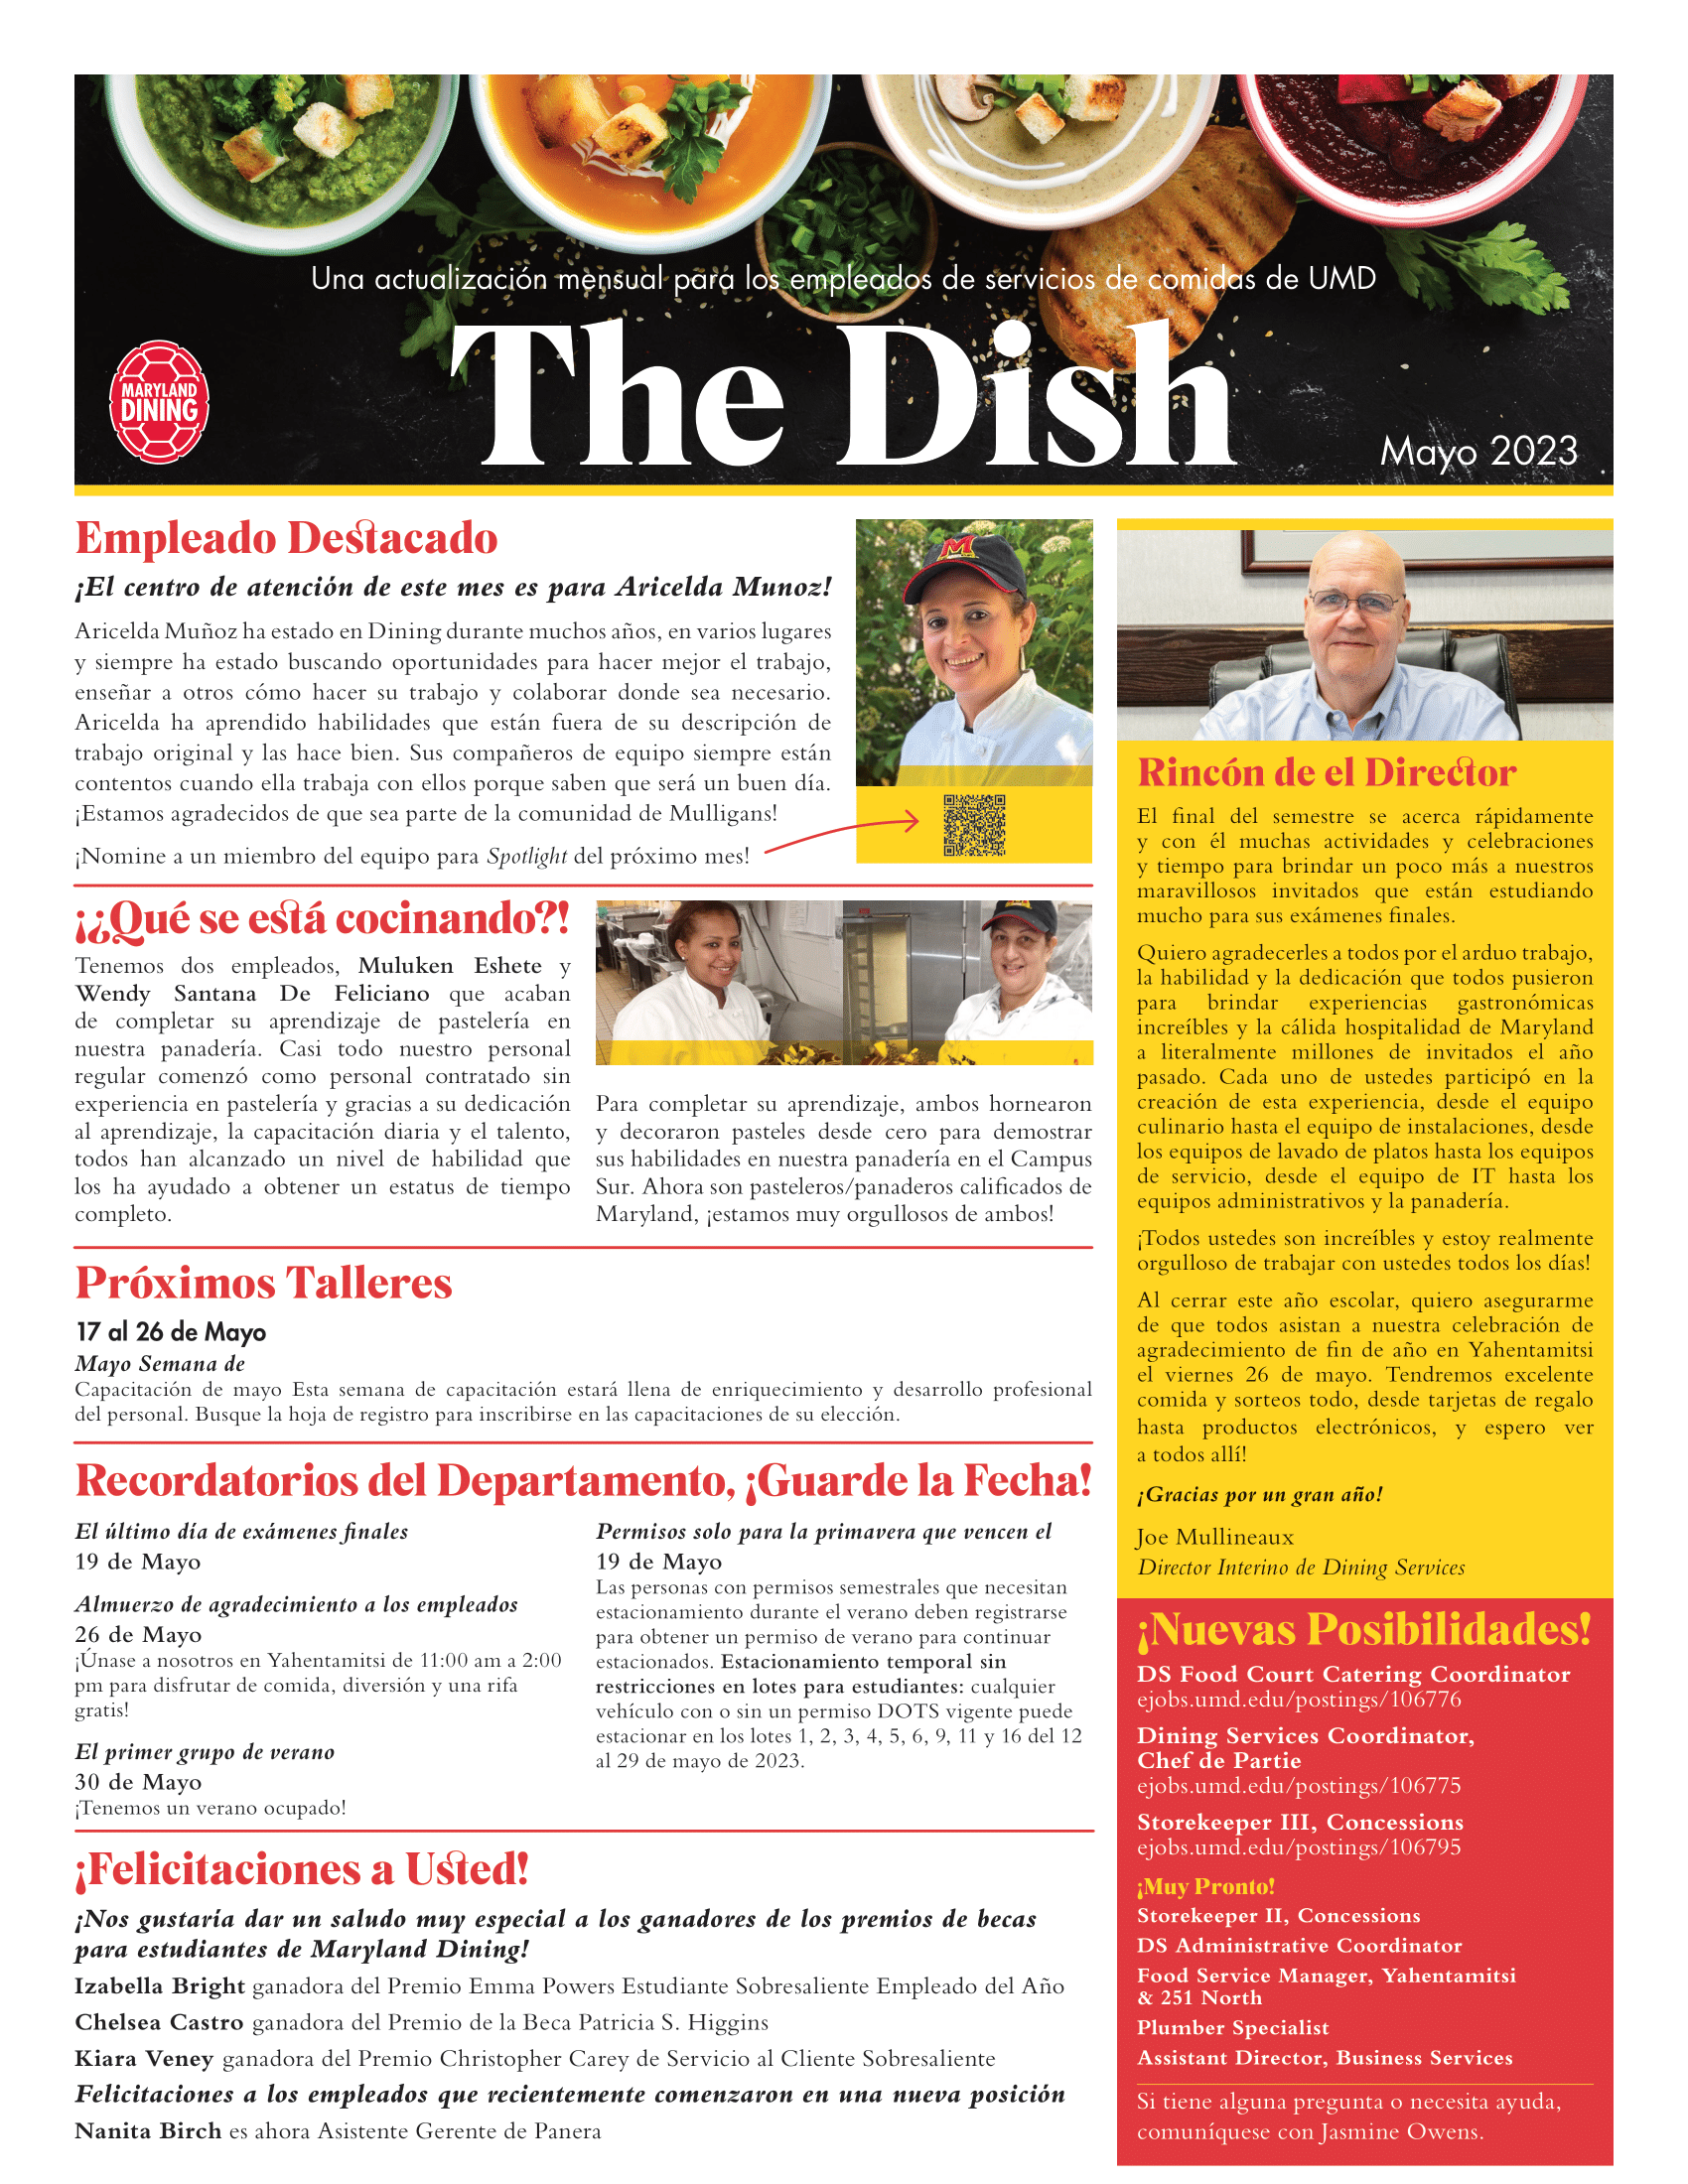 The Dish May 2023 - Spanish